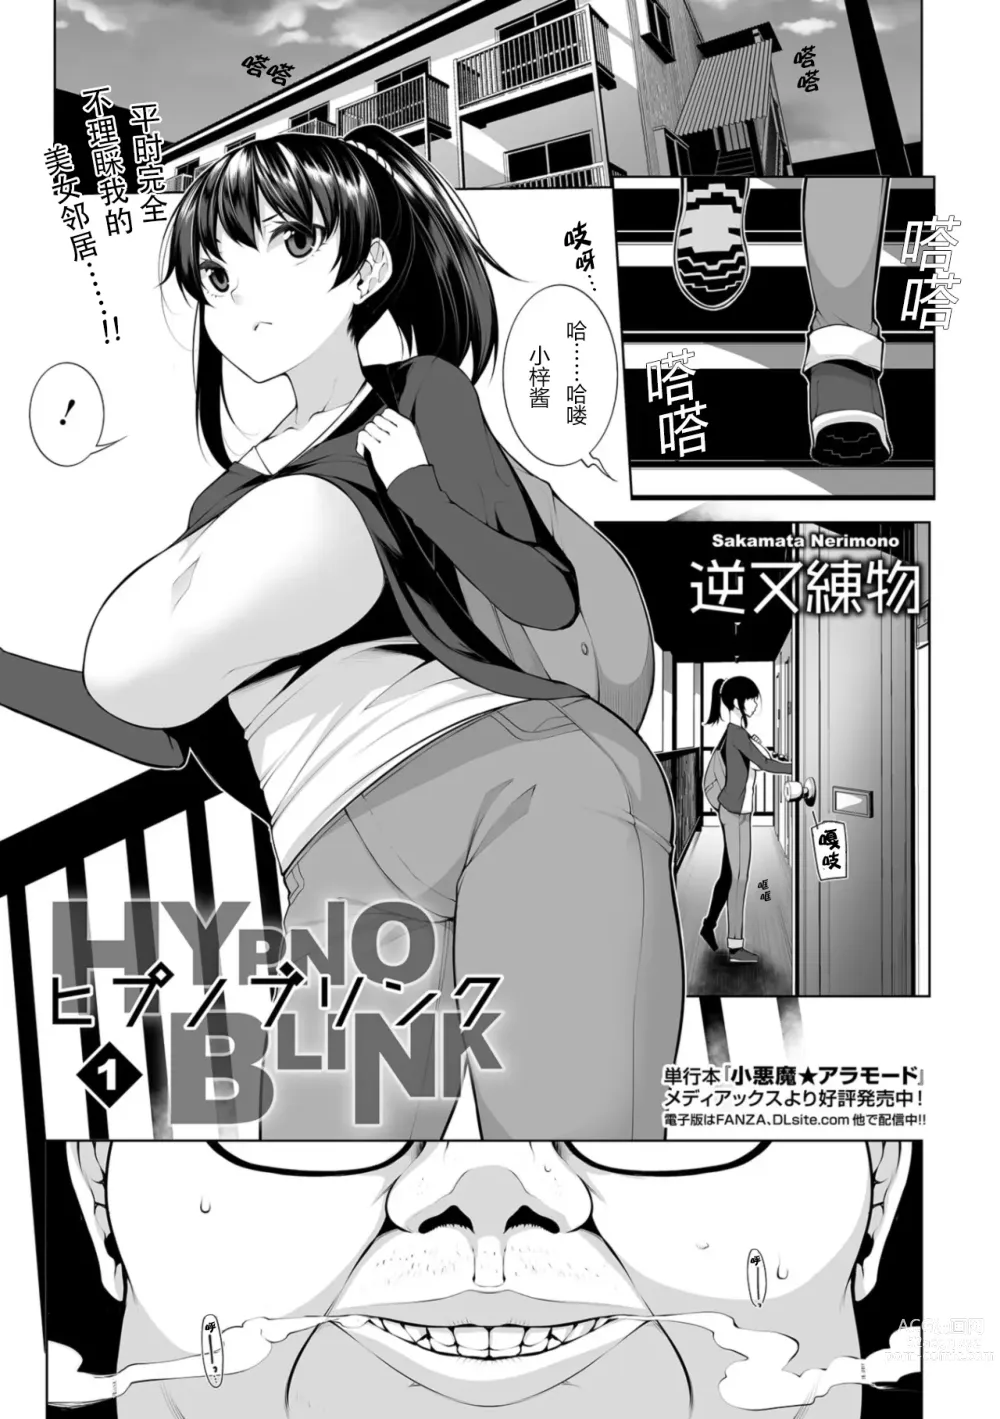 Page 5 of manga HYPNO BLINK FULL